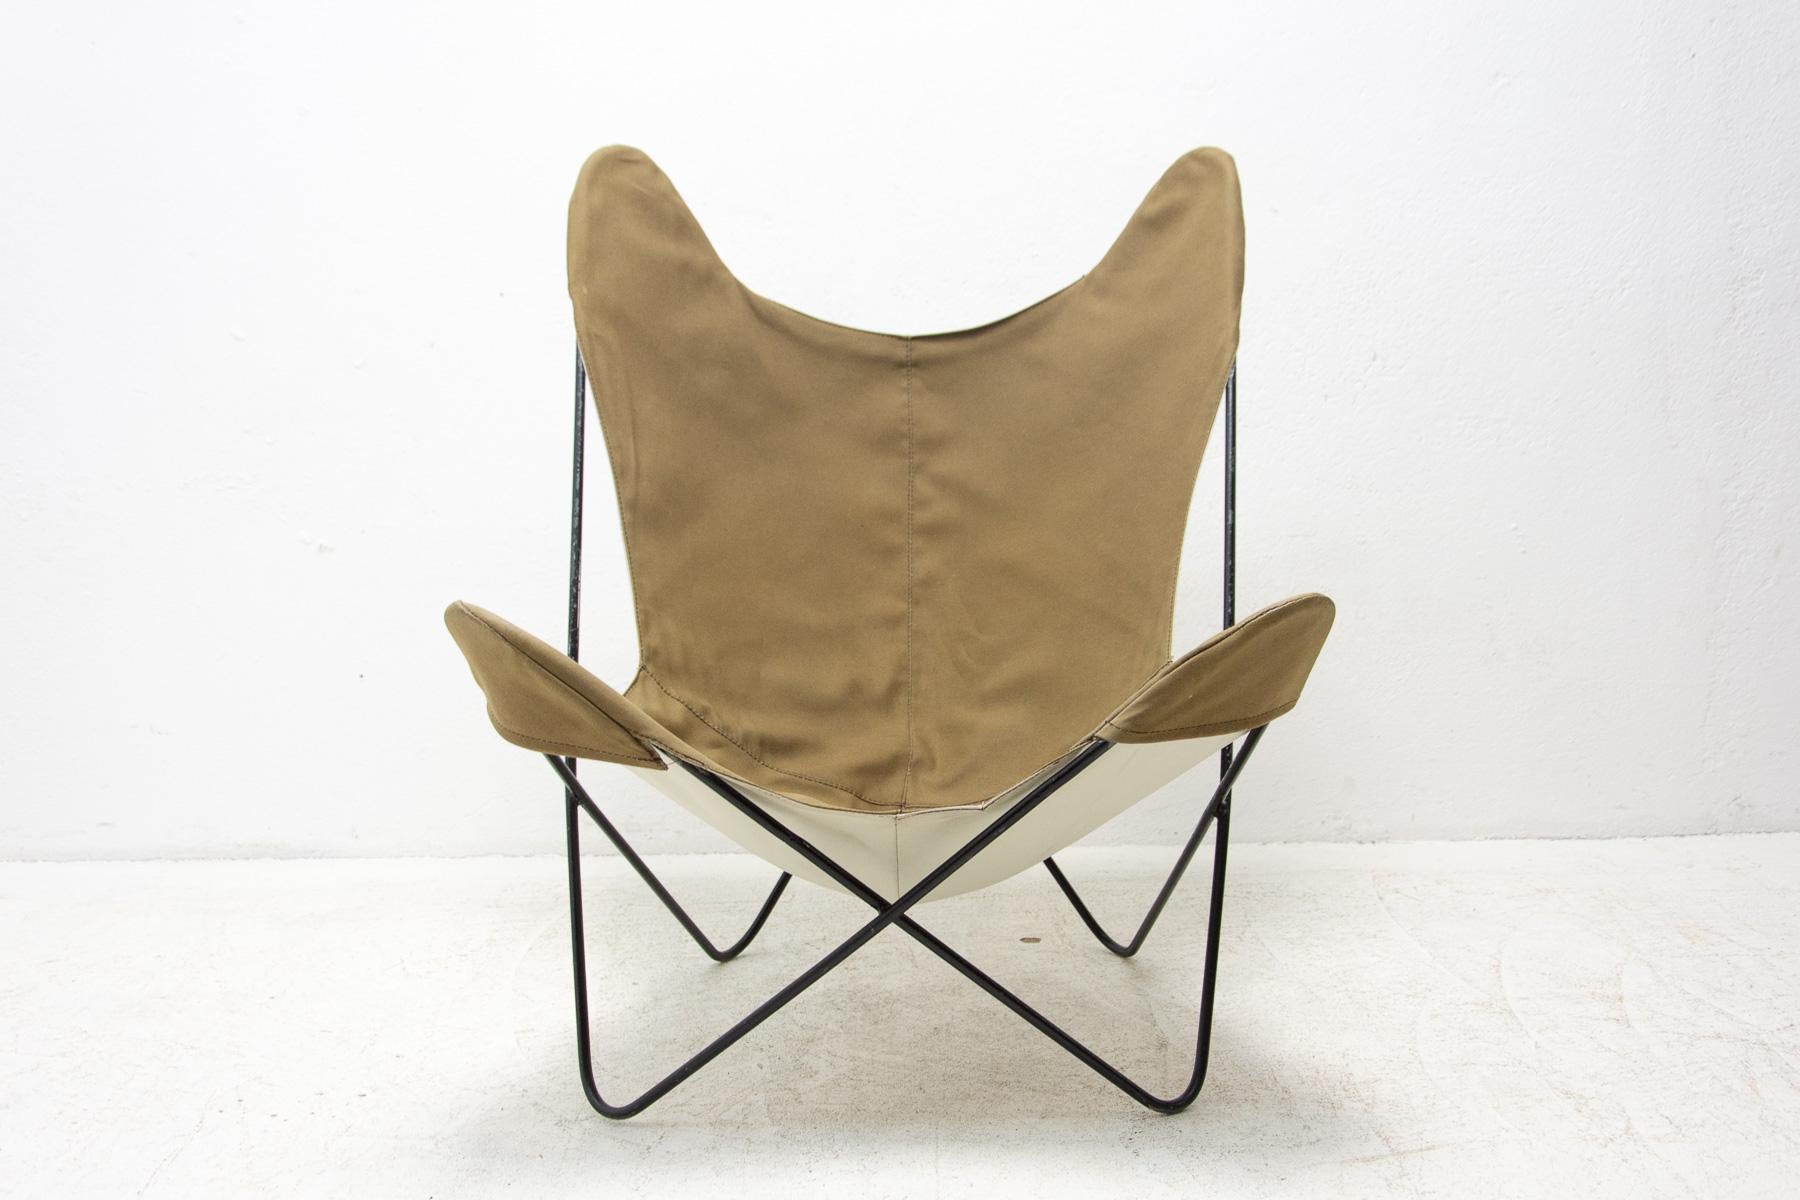 Sculptural Butterfly Chair Originaly Designed by Jorge Ferrari-Hardoy 1